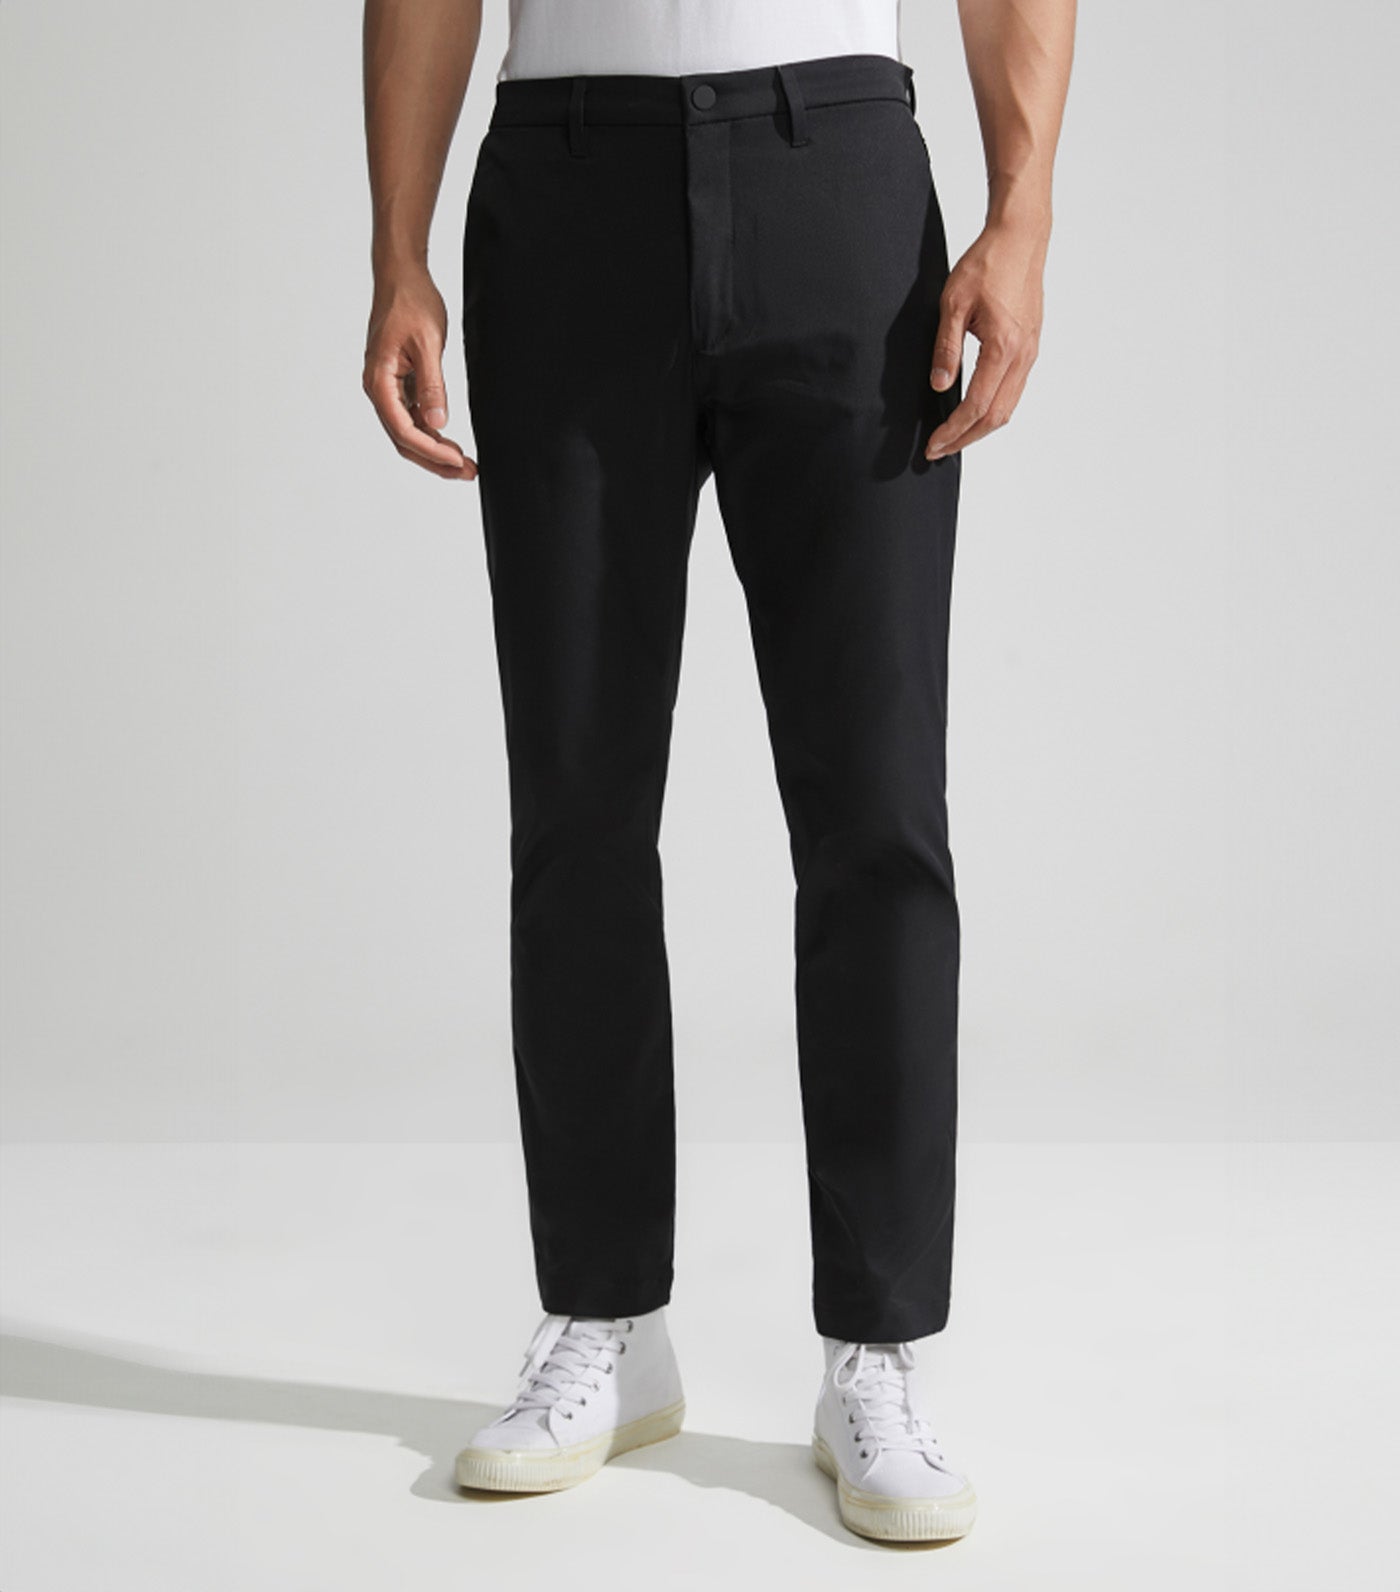 Calvin Klein Black Skinny Crop Pants Women's Size 10 New - beyond